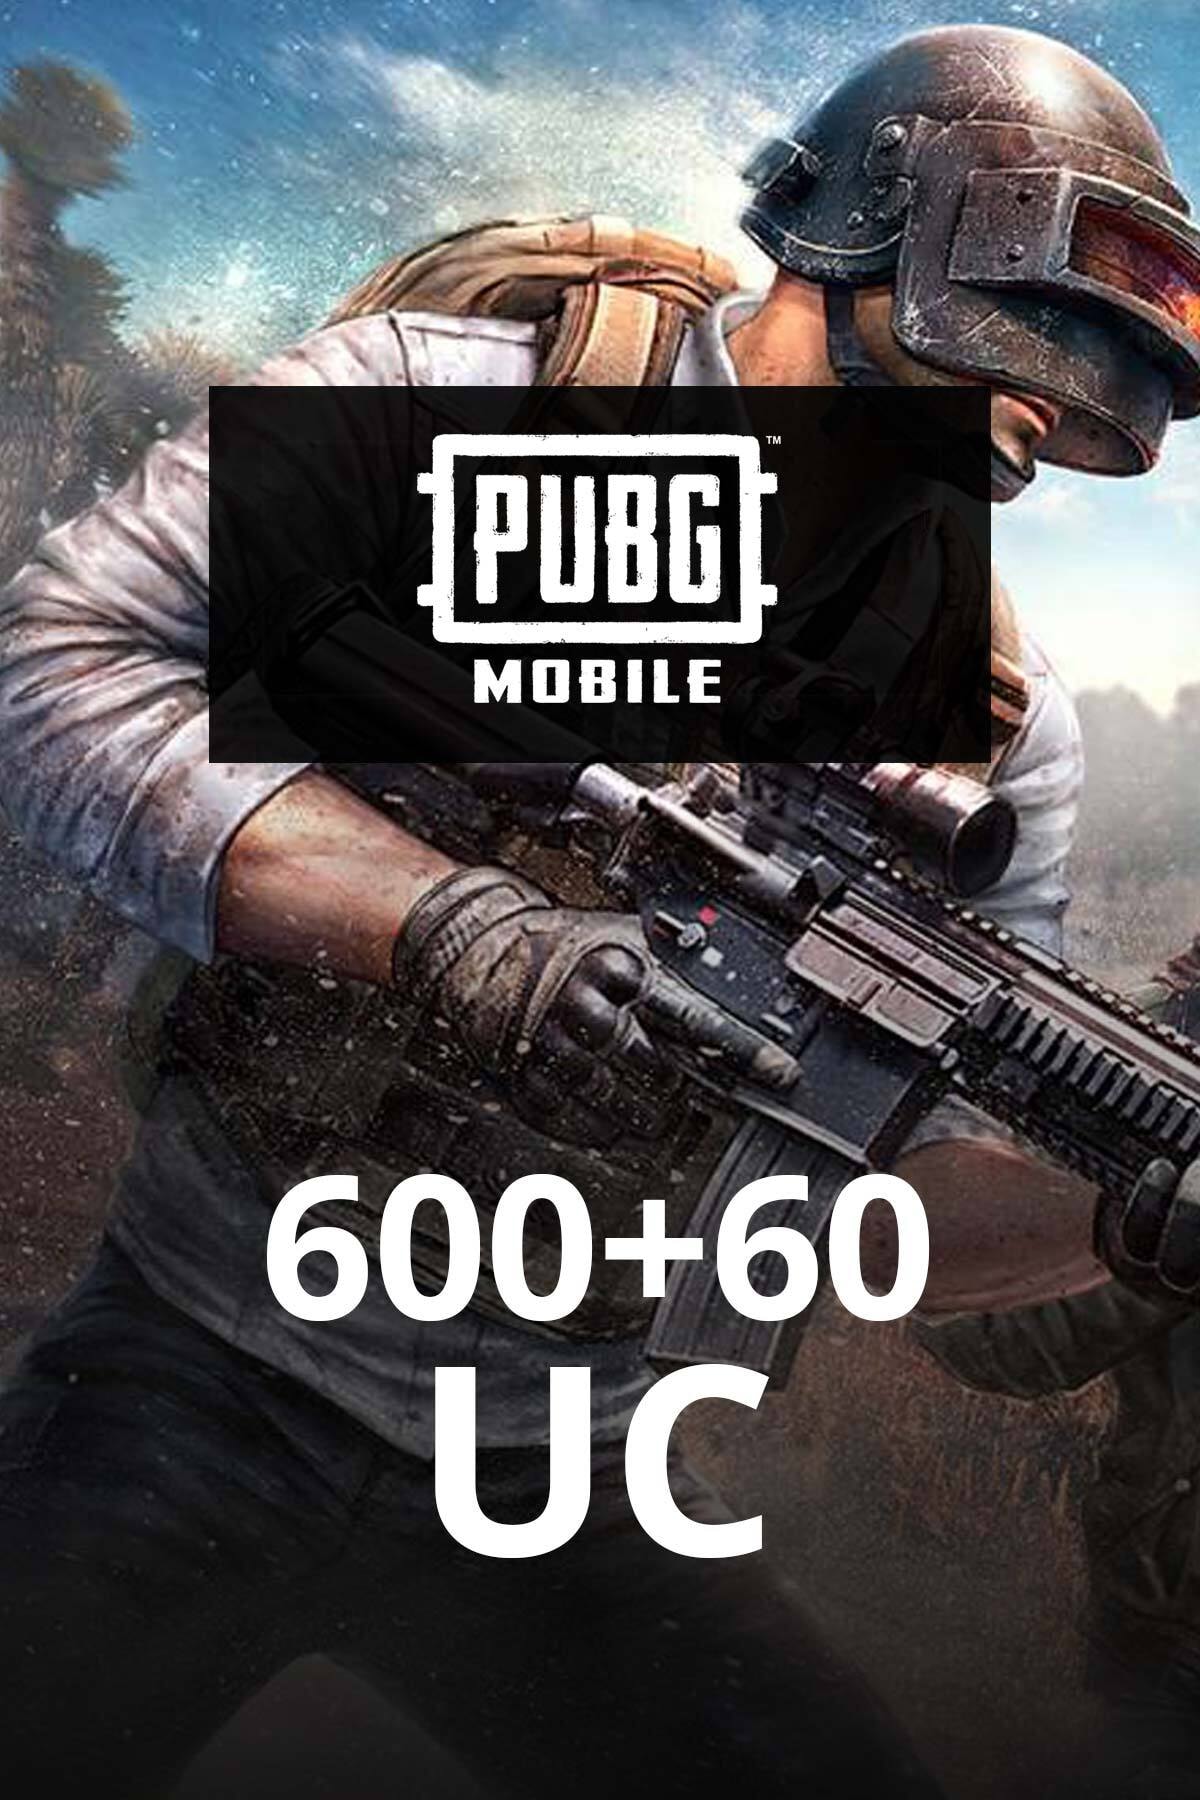 PUBG Mobile 600+60 UC